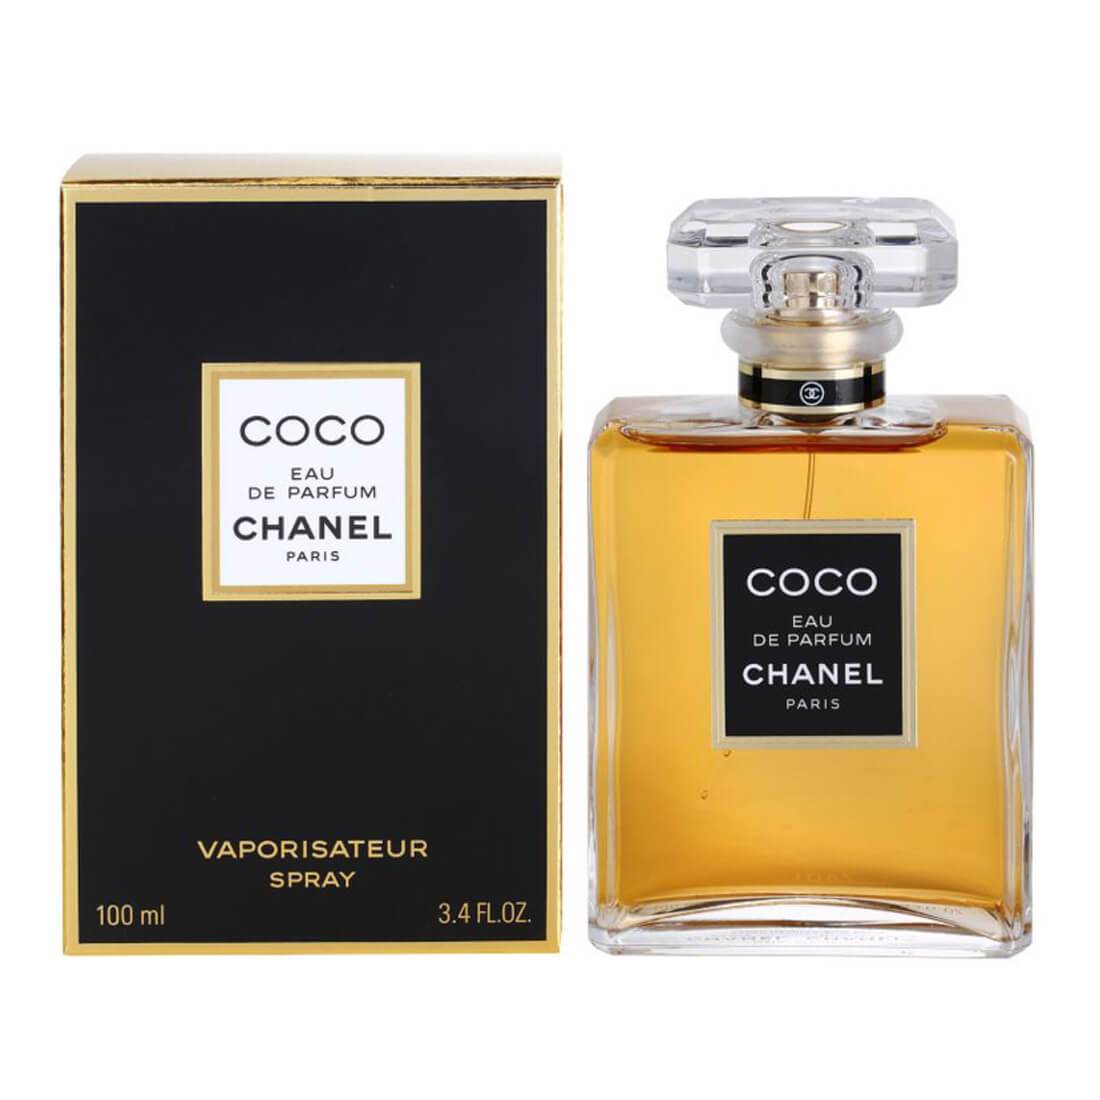 mademoiselle chanel perfume for women